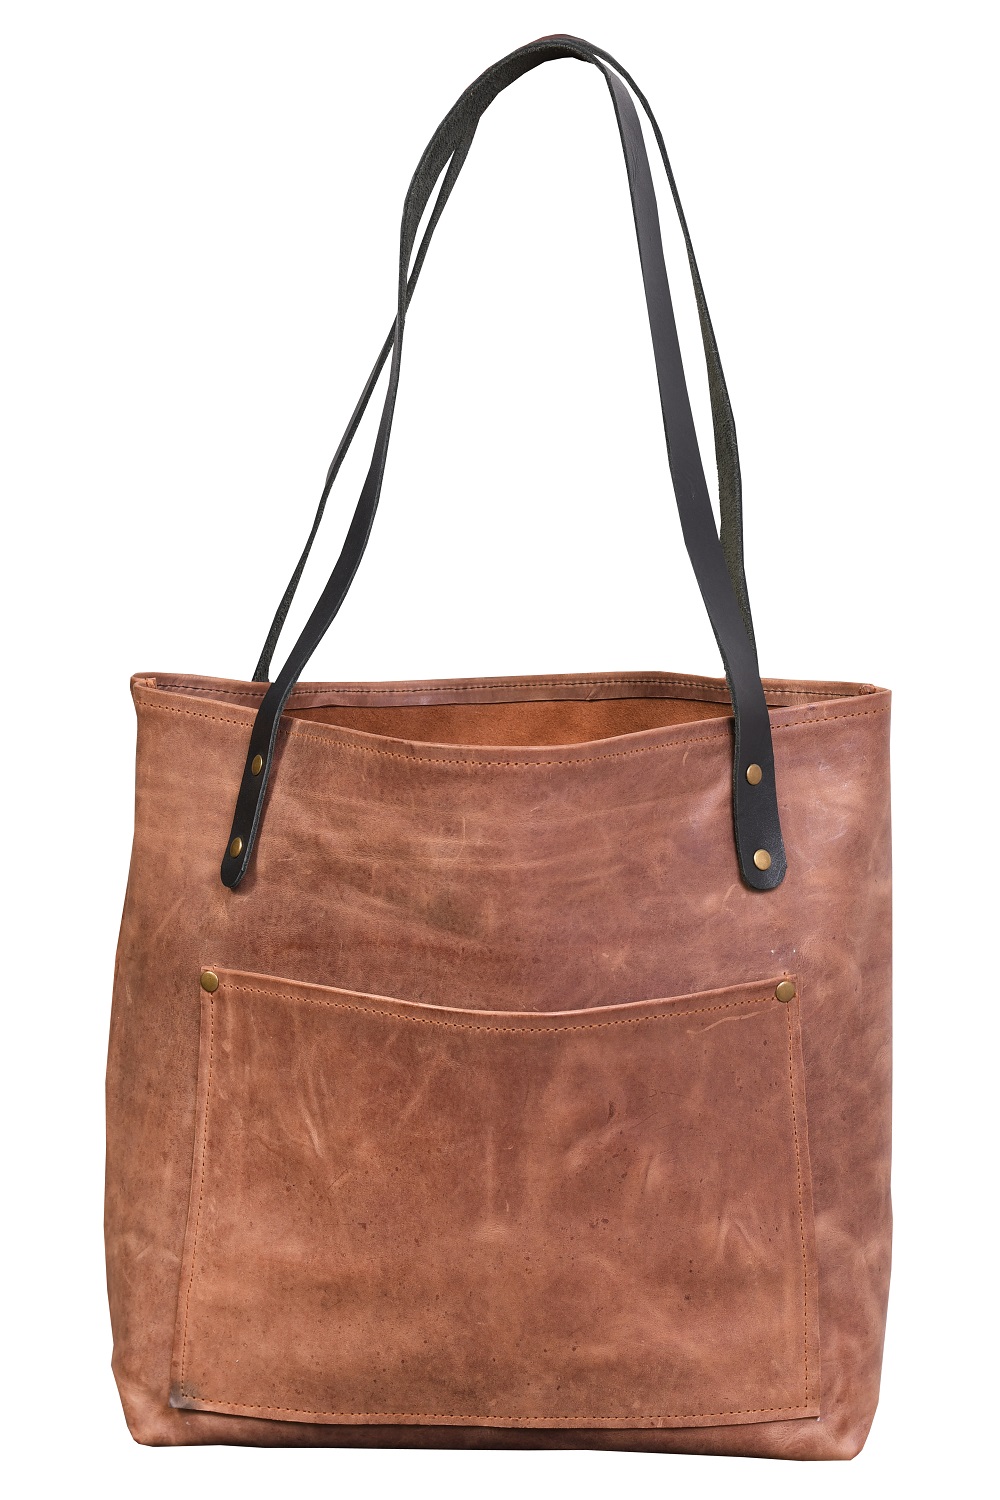 Handmade Women Hand Carry Bag, Tote Style Genuine Leather Purse, Outside Wide Pocket Shoulder Bag